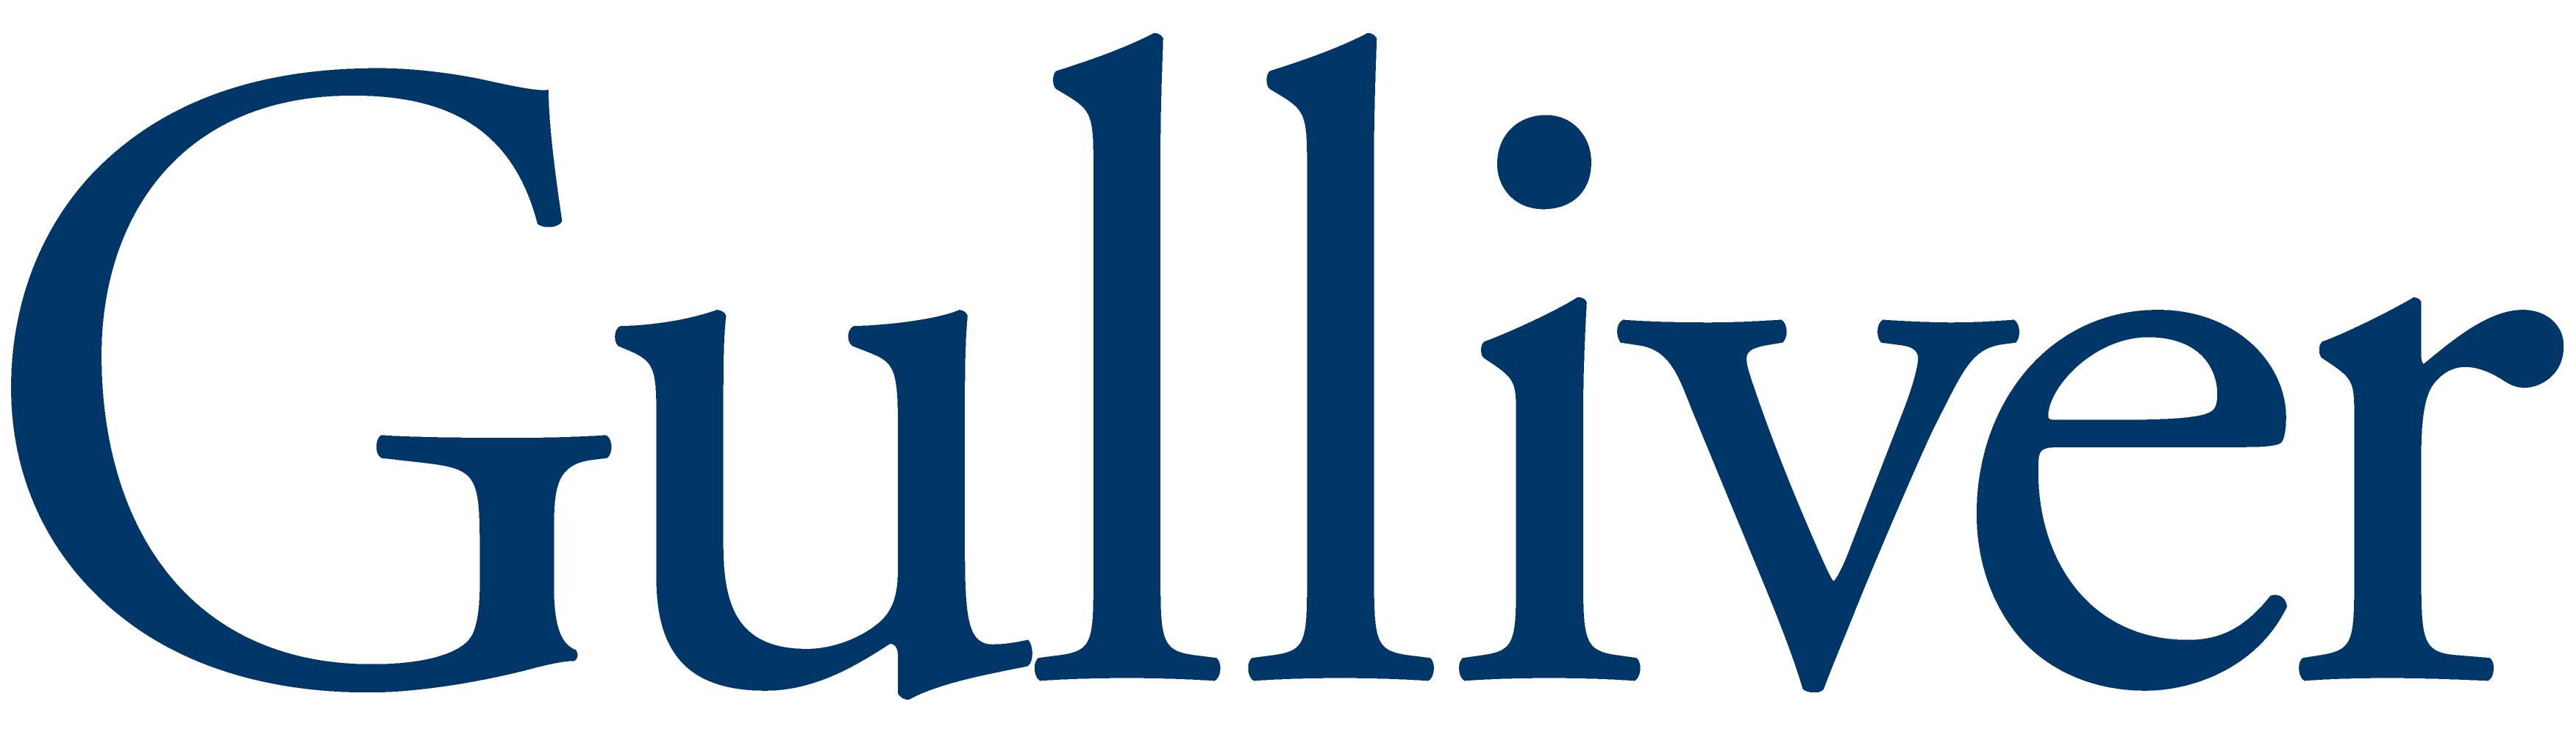 Gulliver's Logo - Visual Arts Support